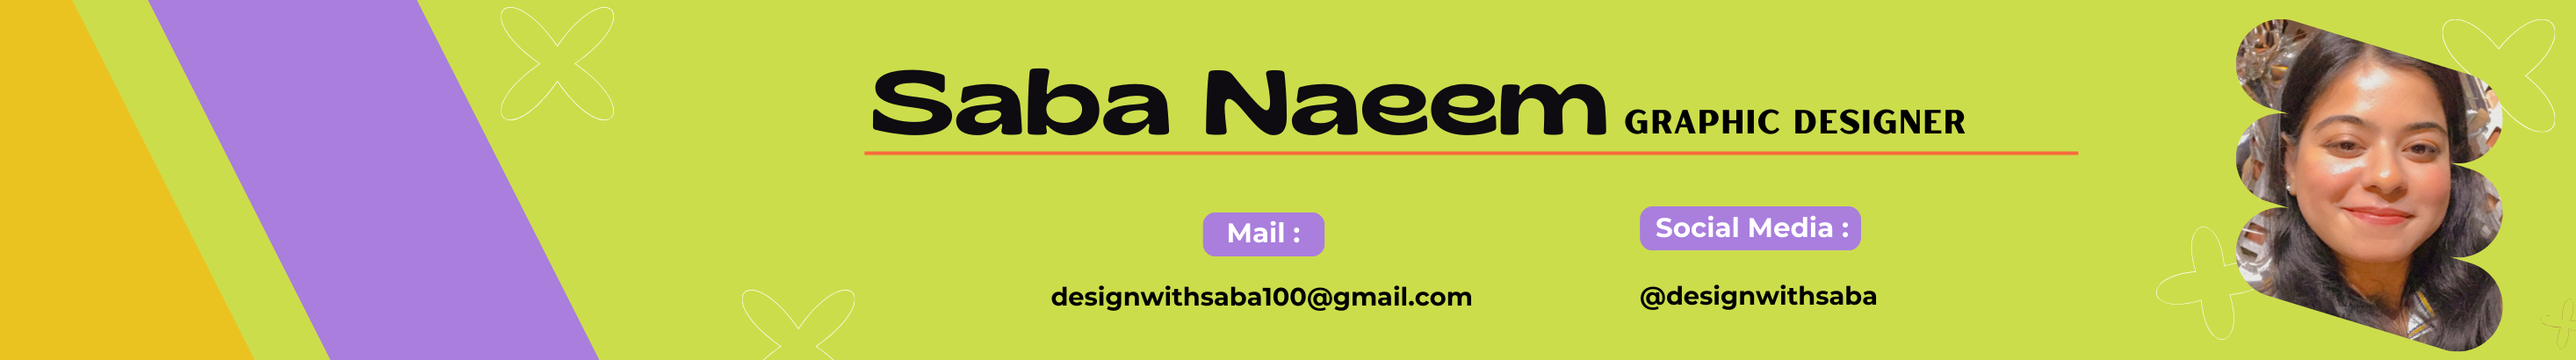 Saba Naeems profilbanner